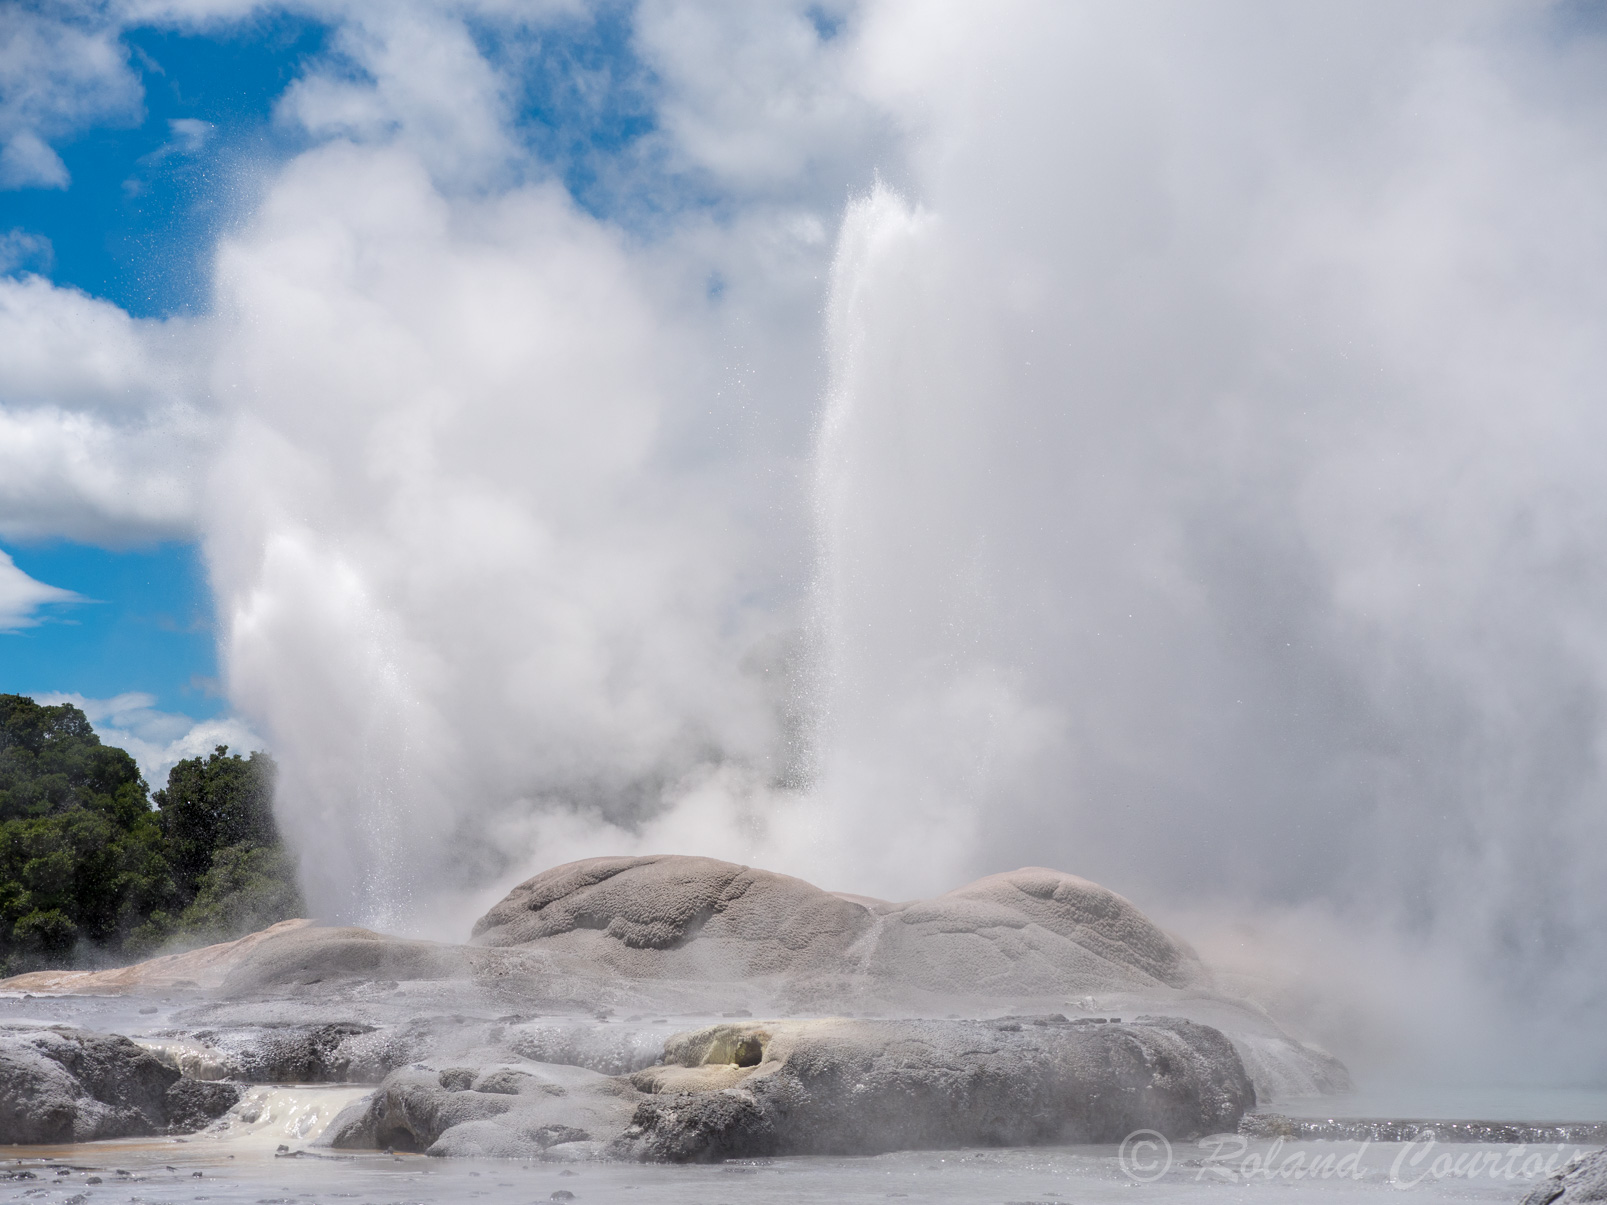 Le site de Te Puia. abrite le geyser de renommée internationale de Pohutu.